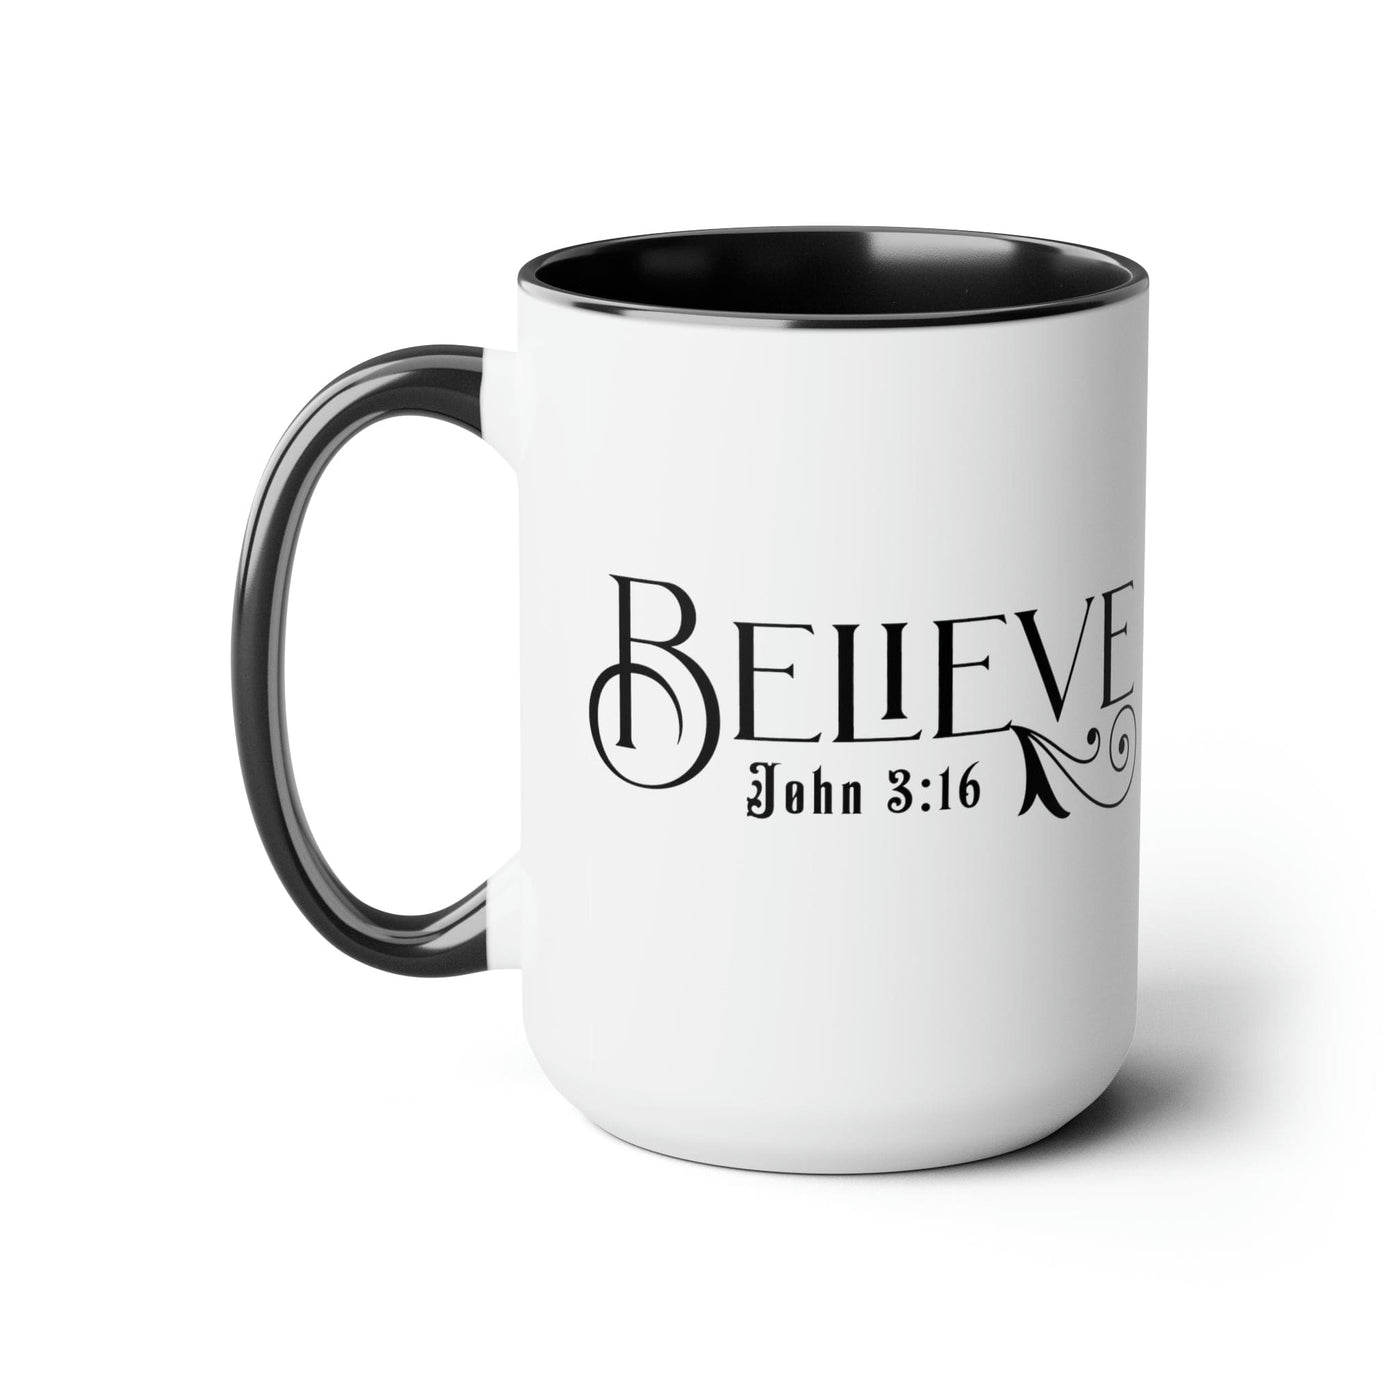 Accent Ceramic Coffee Mug 15oz - Believe John 3:16 Black Illustration -